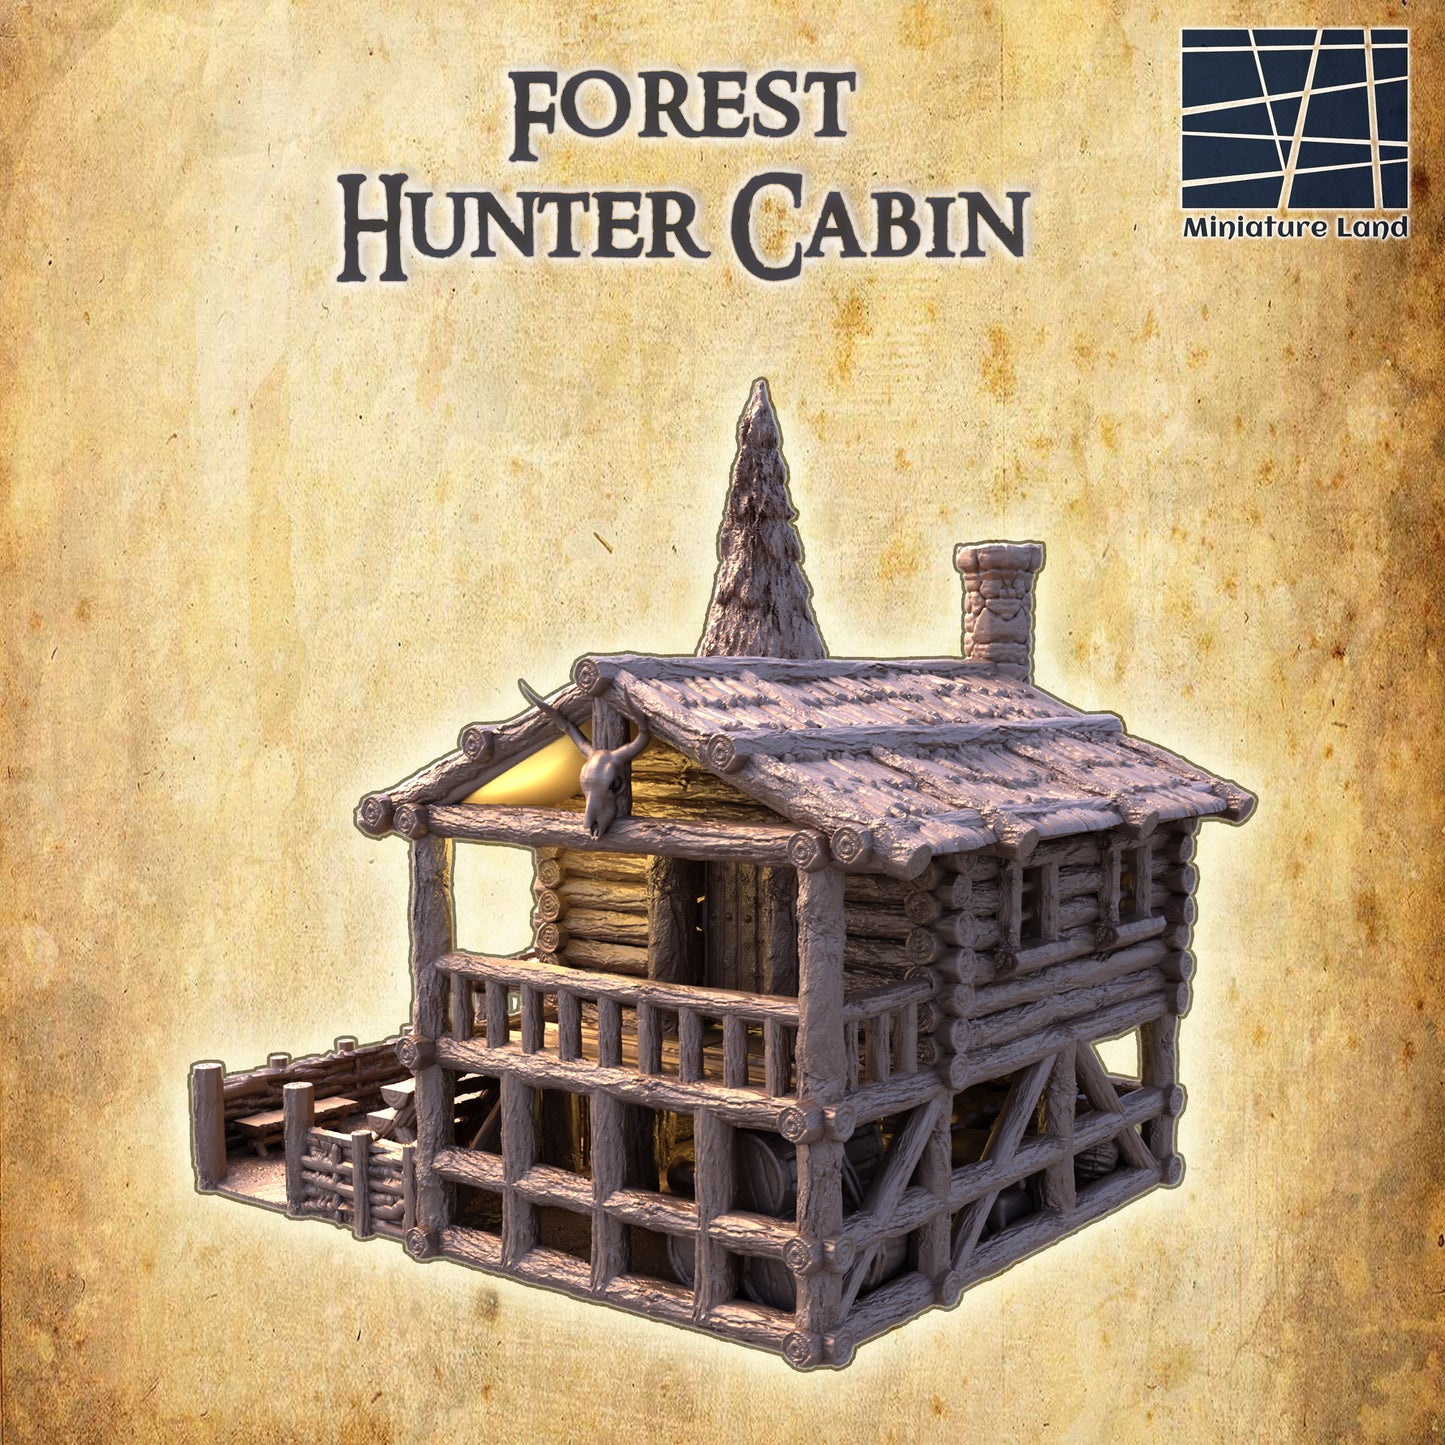 Forest Cabin, hunters cabin